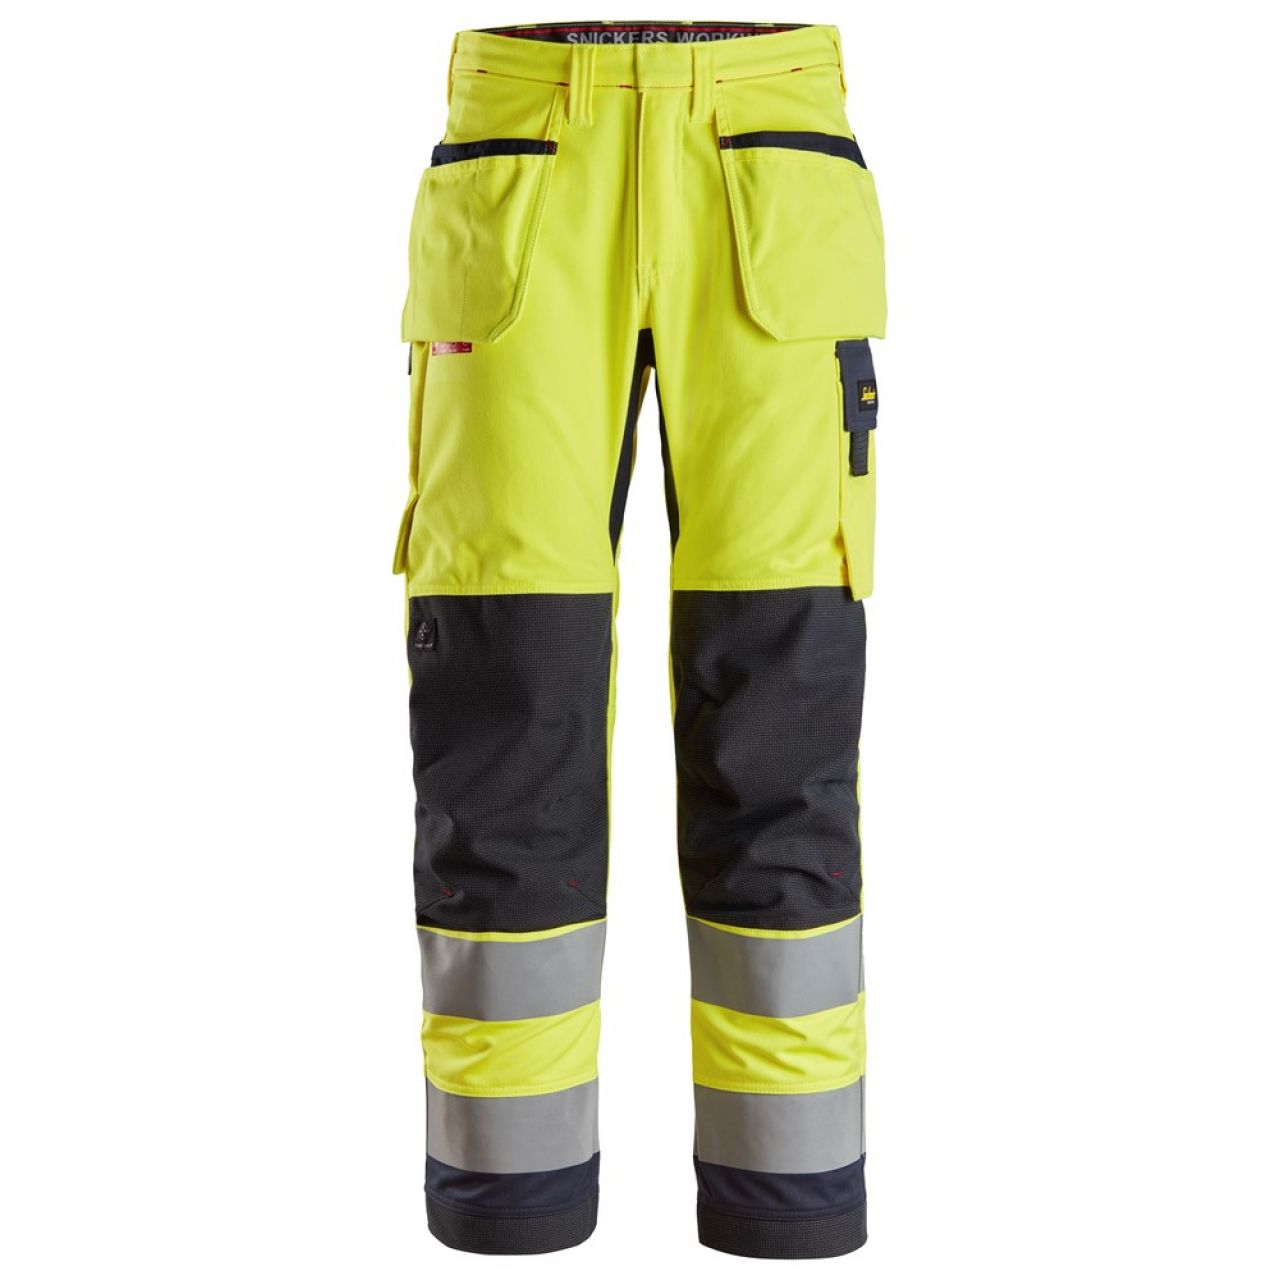 6260 Pantalones largos de trabajo de alta visibilidad clase 2 con bolsillos flotantes ProtecWork amarillo-azul marino talla 54